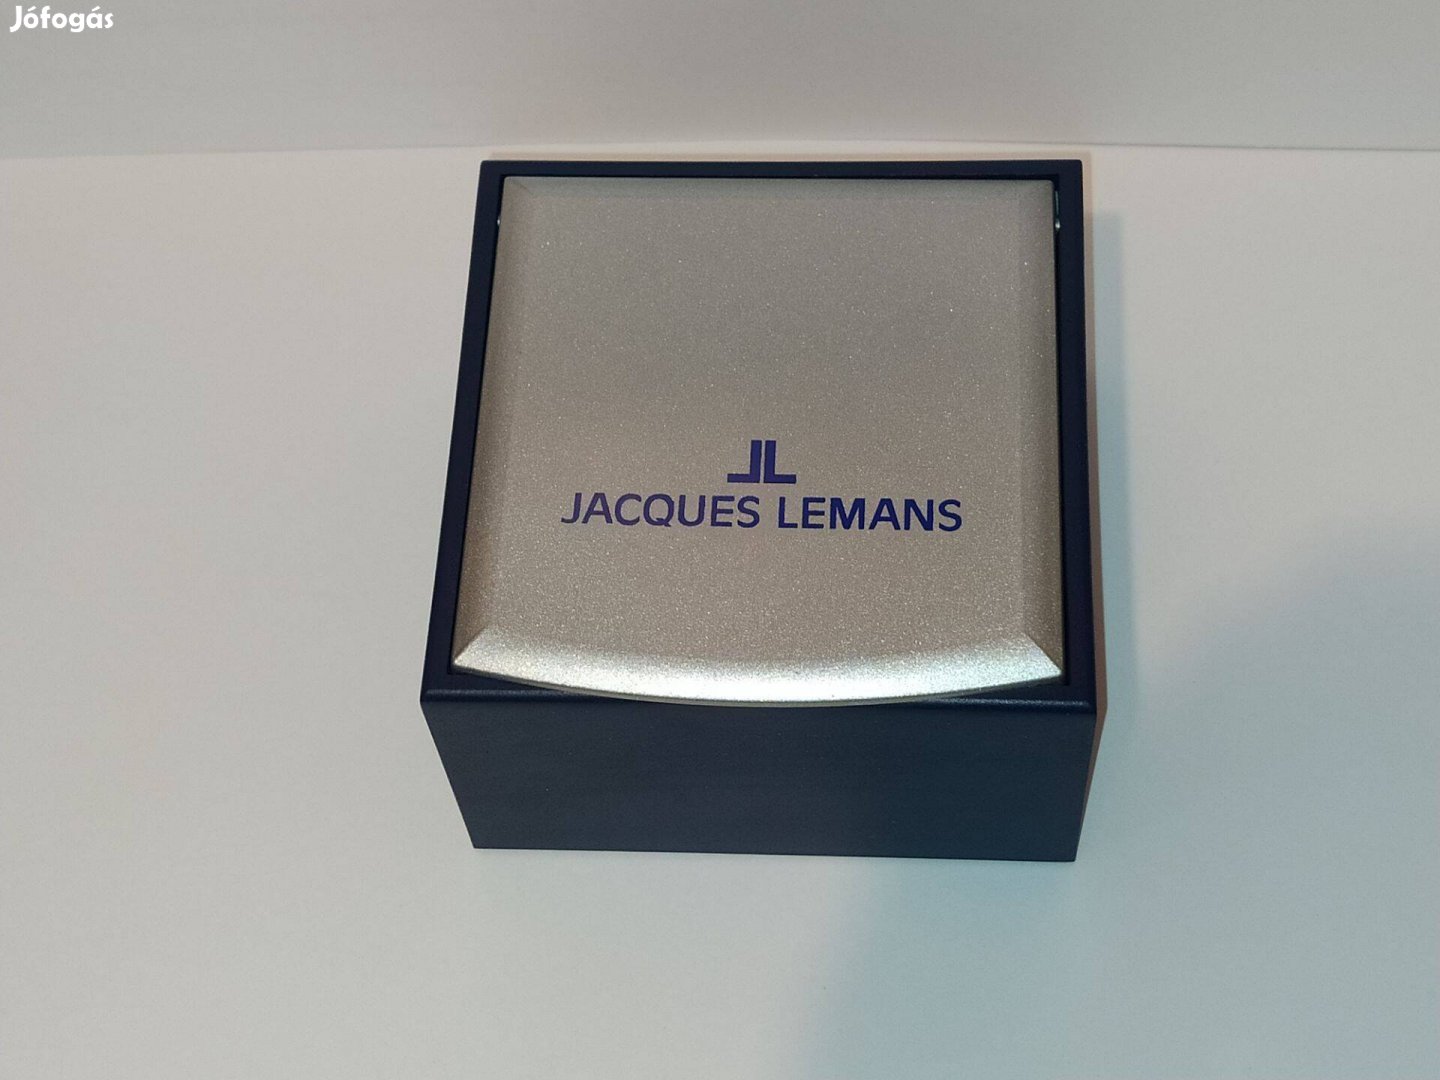 Jacques Lemans karóra doboz